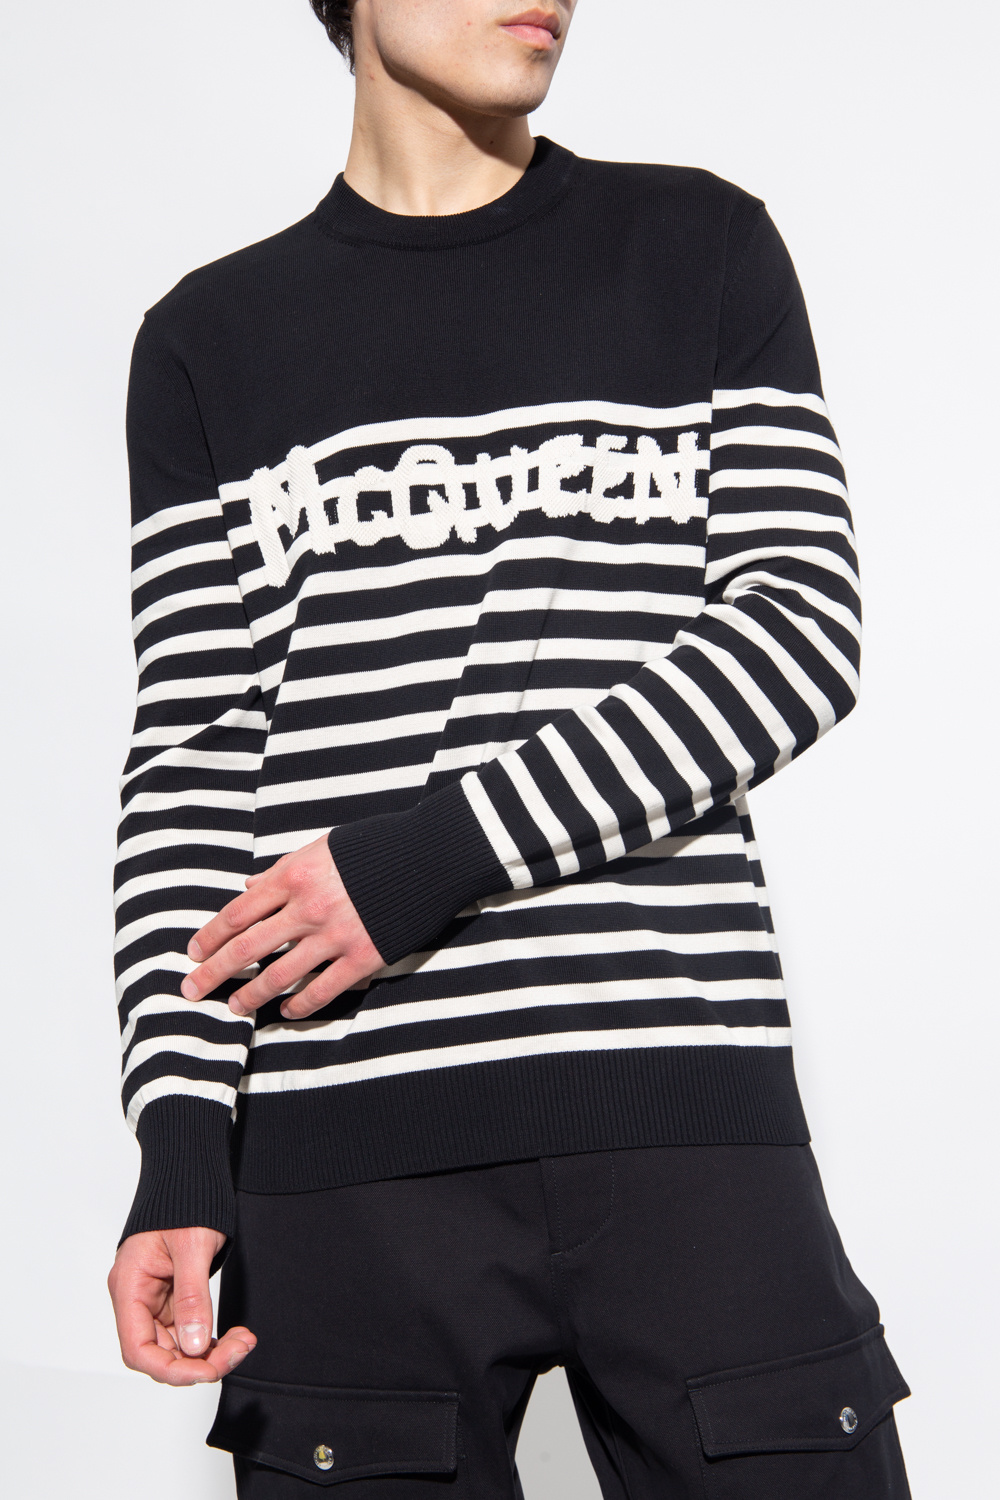 Alexander McQueen Alexander McQueen applique striped cardigan